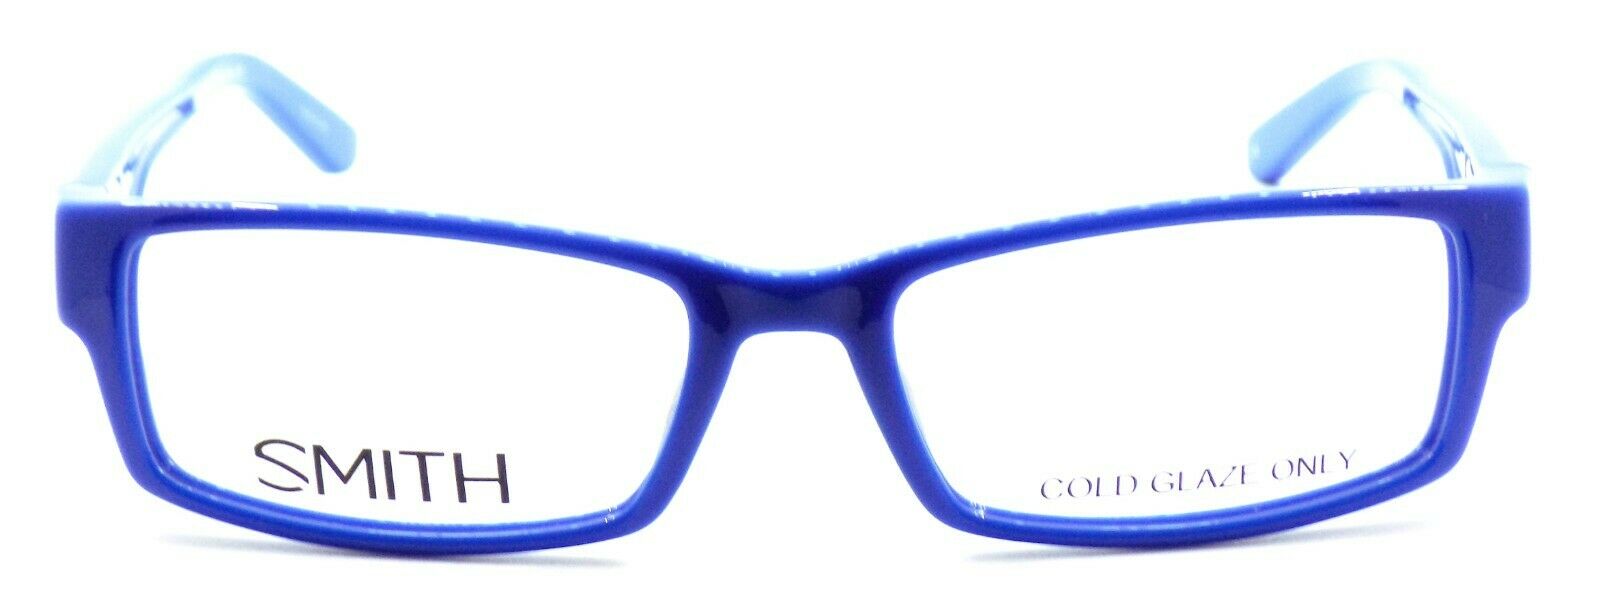 2-SMITH Optics Fader 2.0 LN5 Unisex Eyeglasses Frames 53-17-140 Lapis Frost Blue-762753185358-IKSpecs